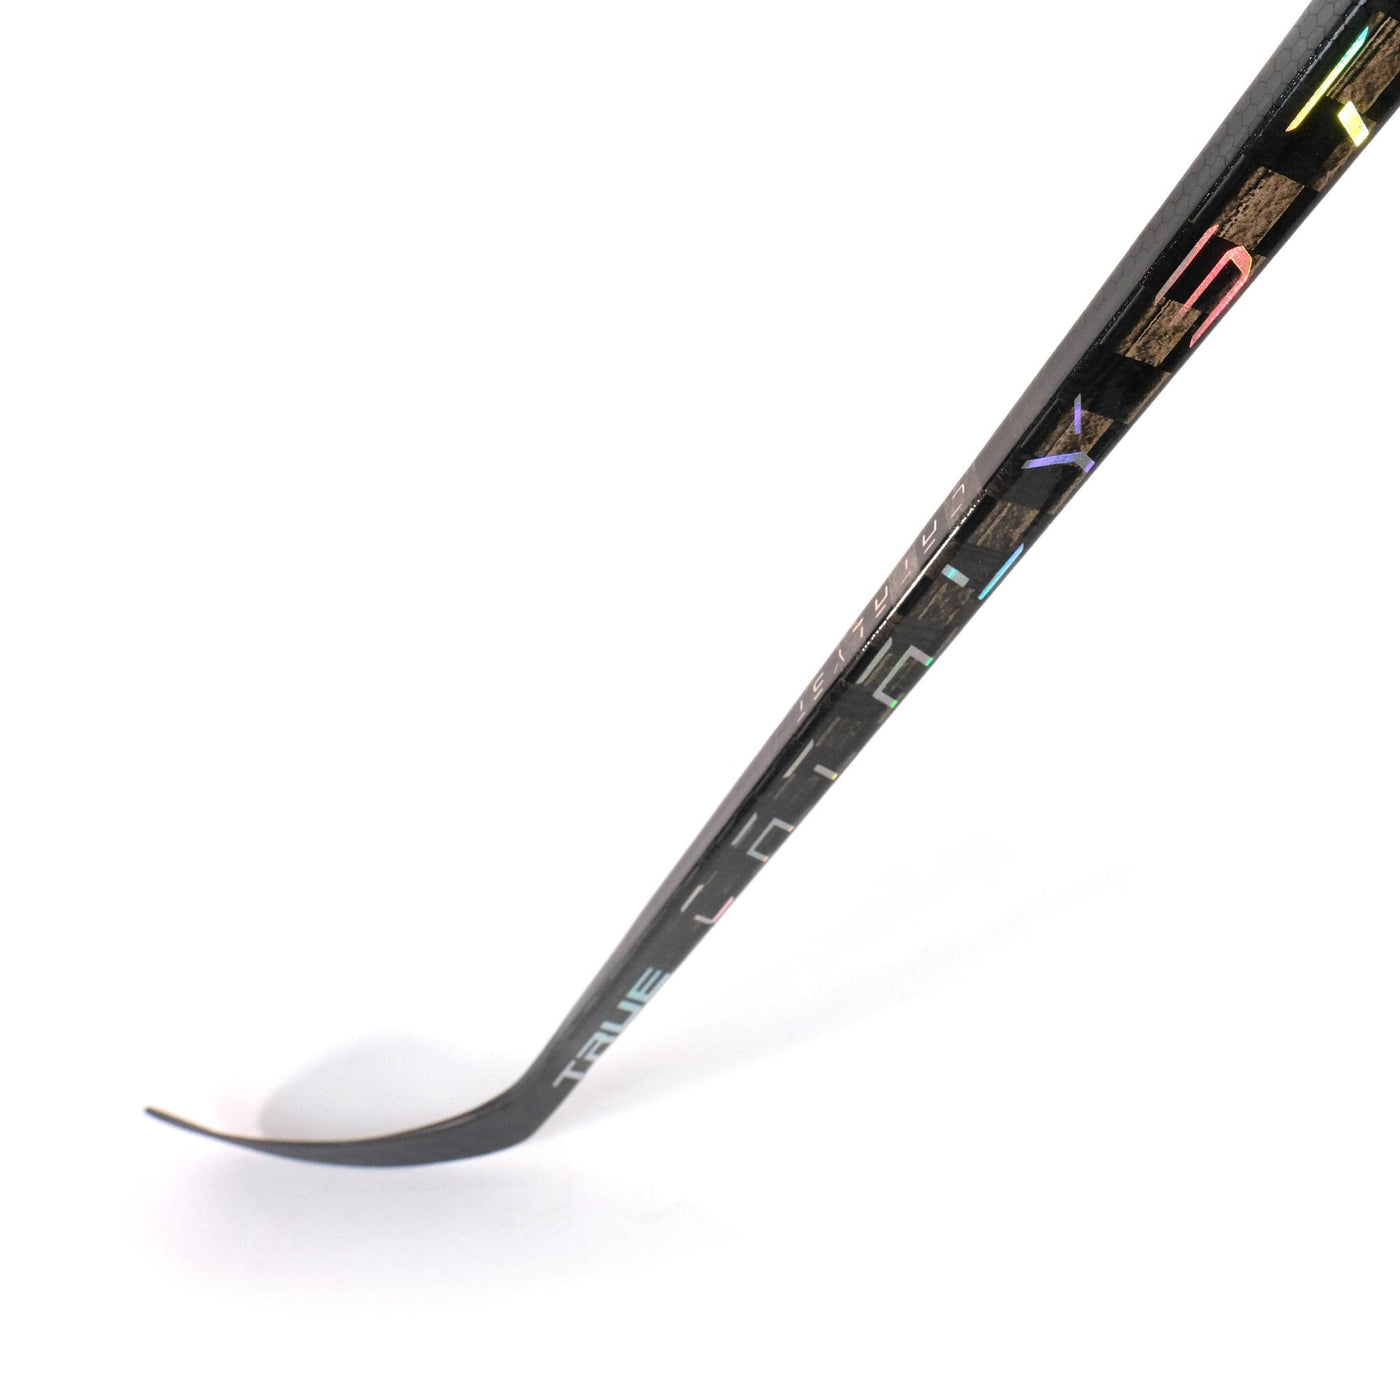 TRUE Catalyst 9X Pro Stock Senior Hockey Stick - Mathieu Joseph #2